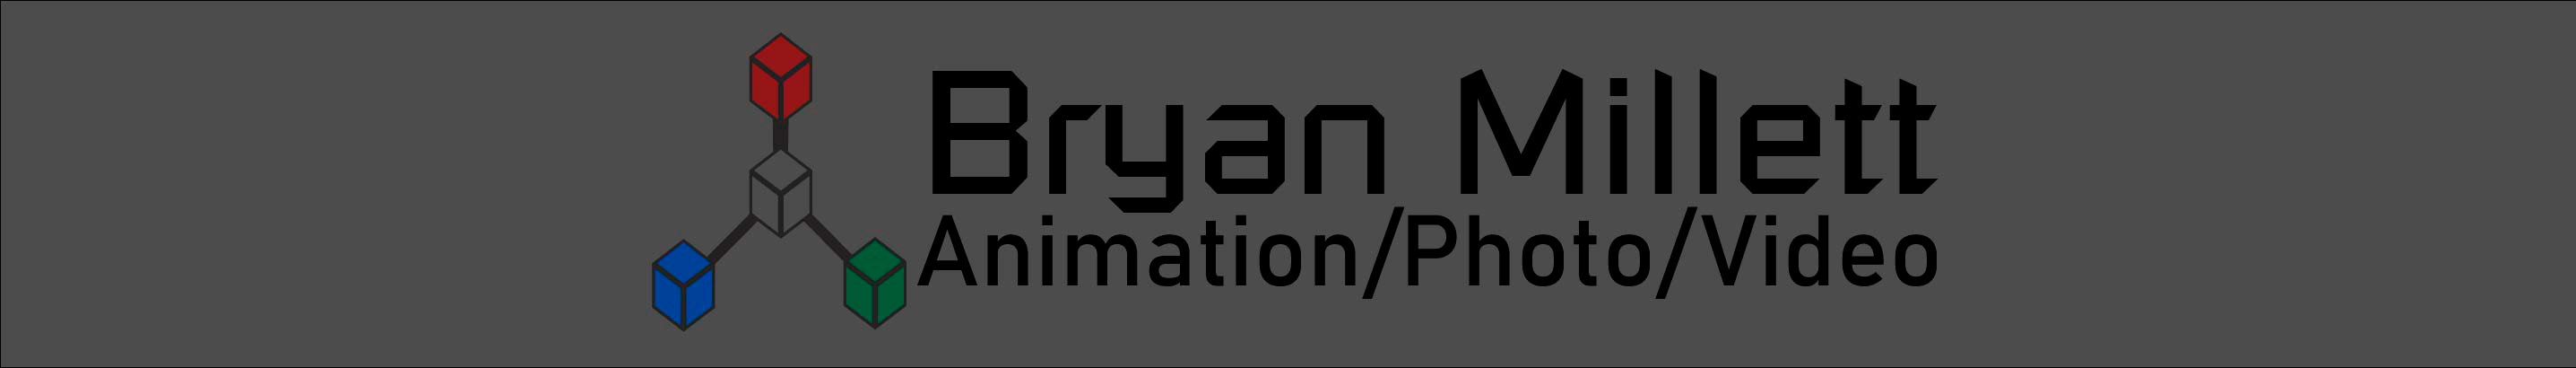 Bryan Millett's profile banner